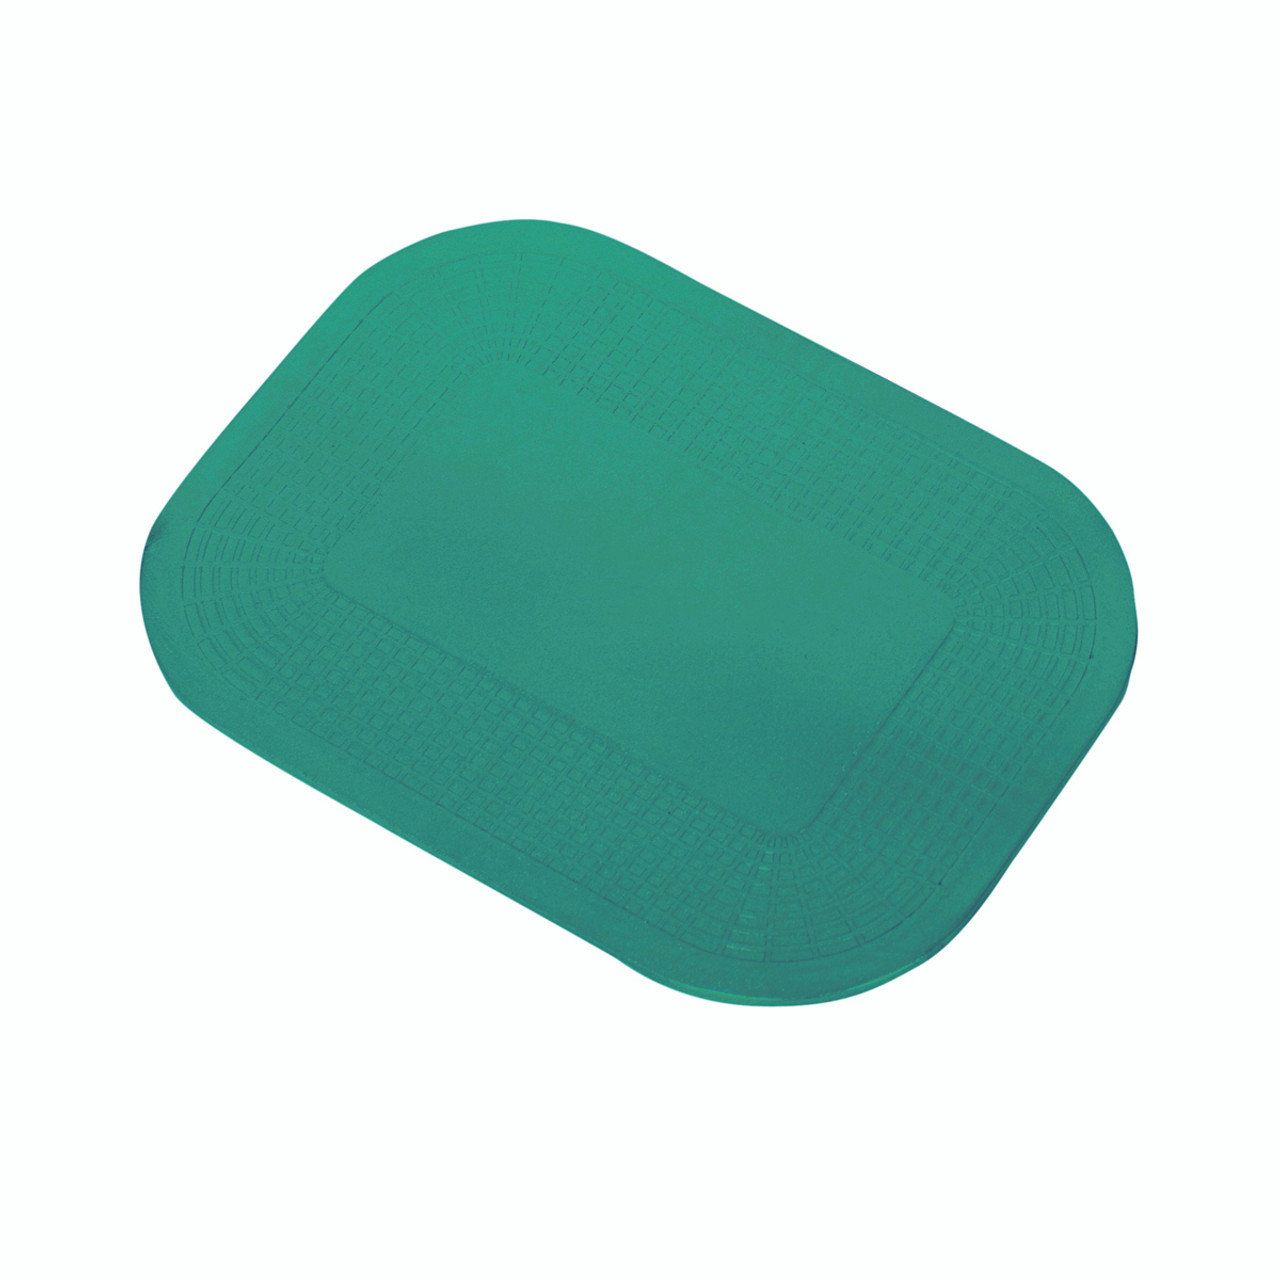 Dycem¨ non-slip rectangular pad, 15"x18", forest green